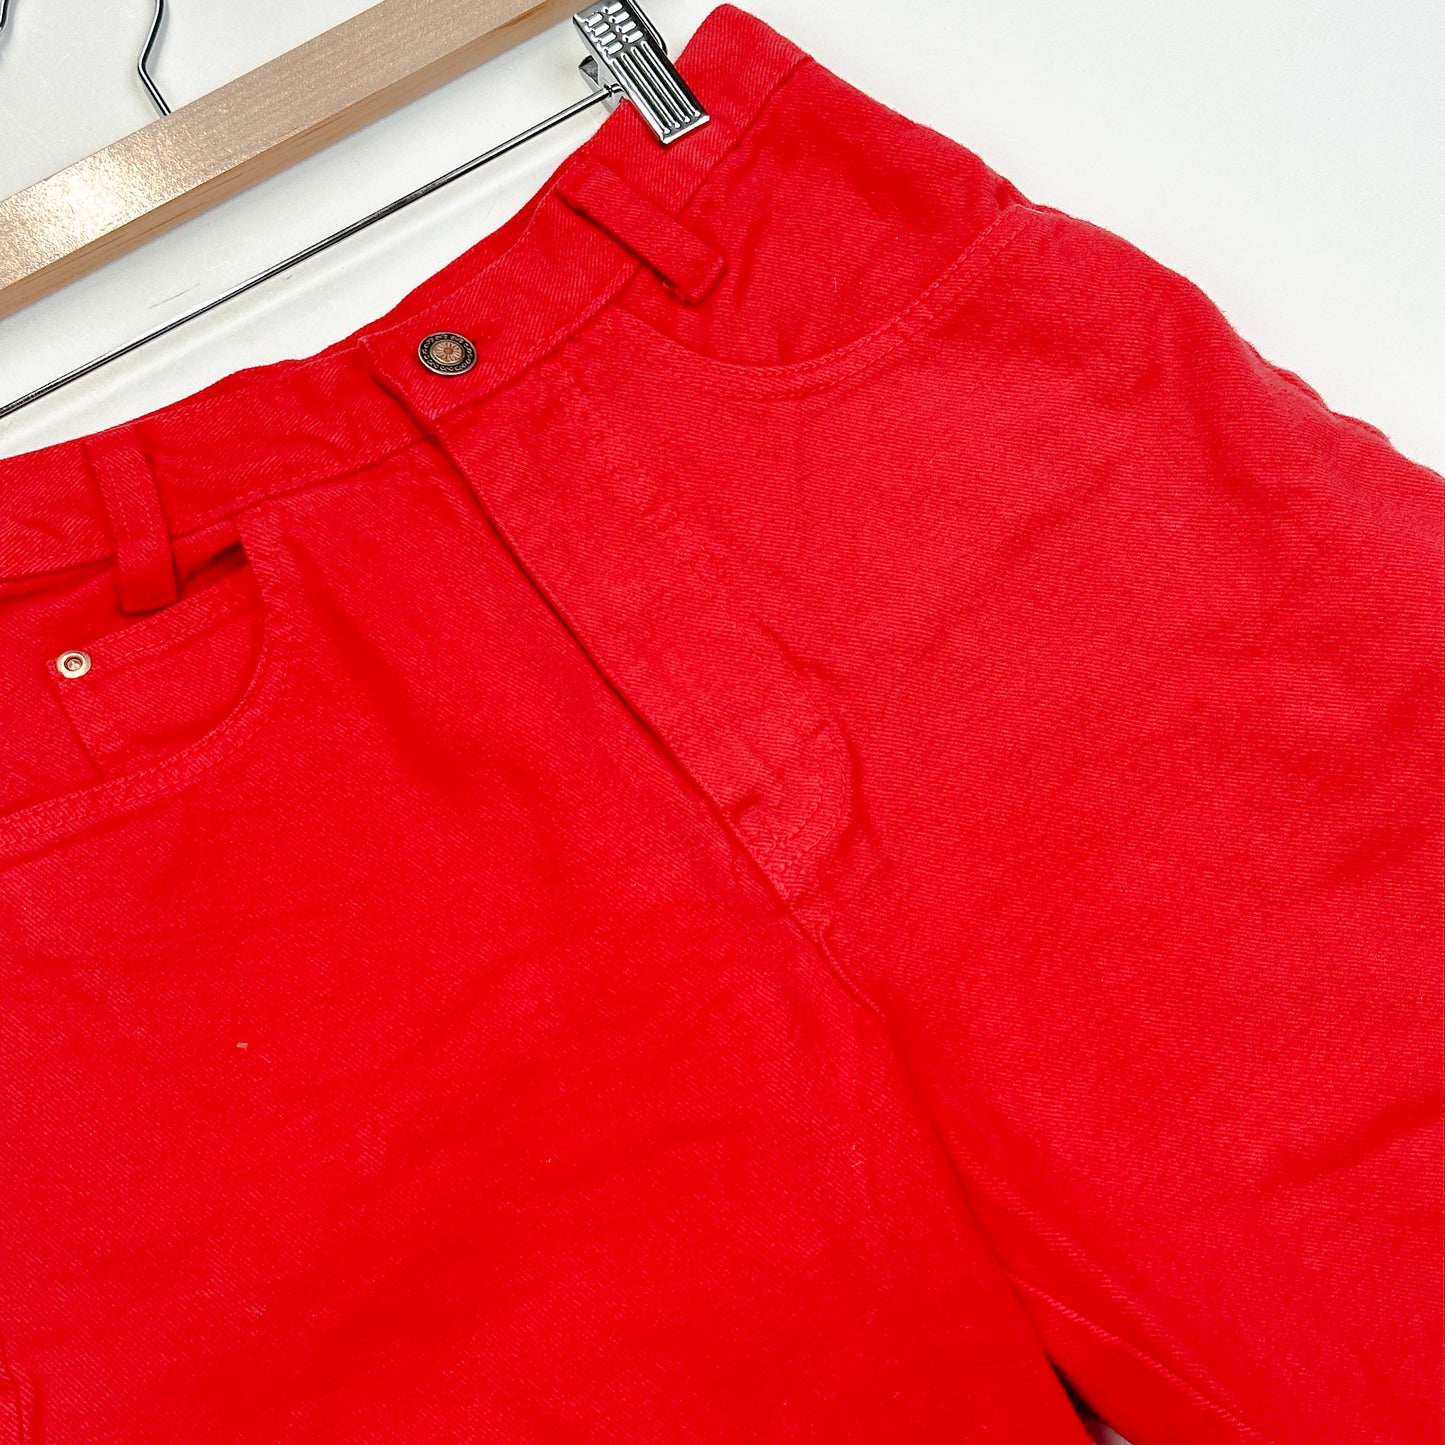 Vintage Red Denim Shorts - Size 14-16yr